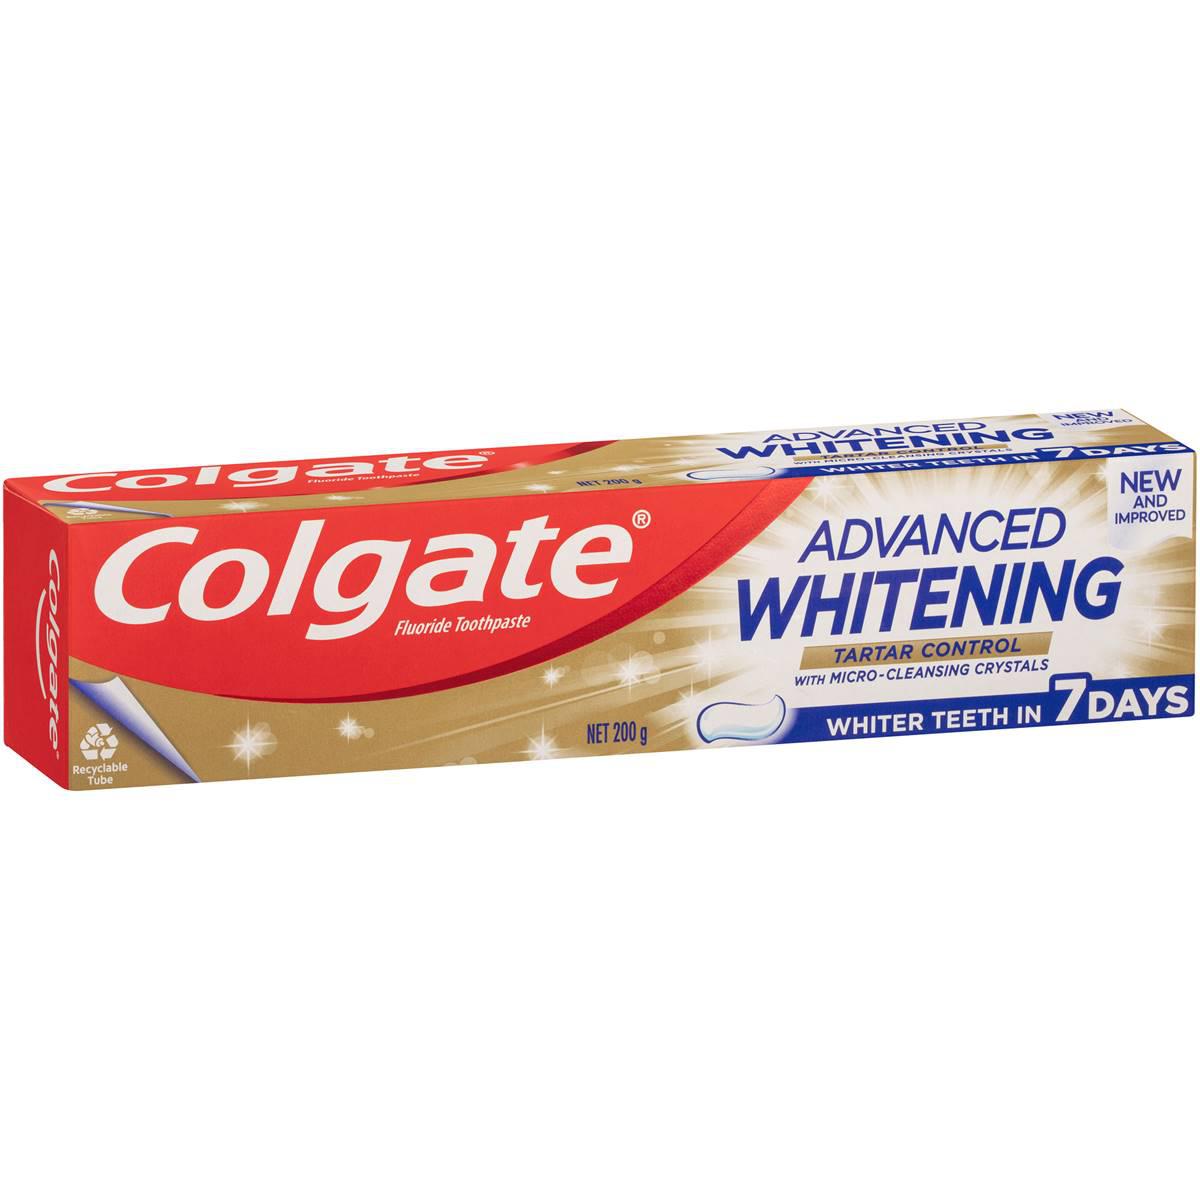 Colgate Advanced Whitening Tartar Control Toothpaste 200g